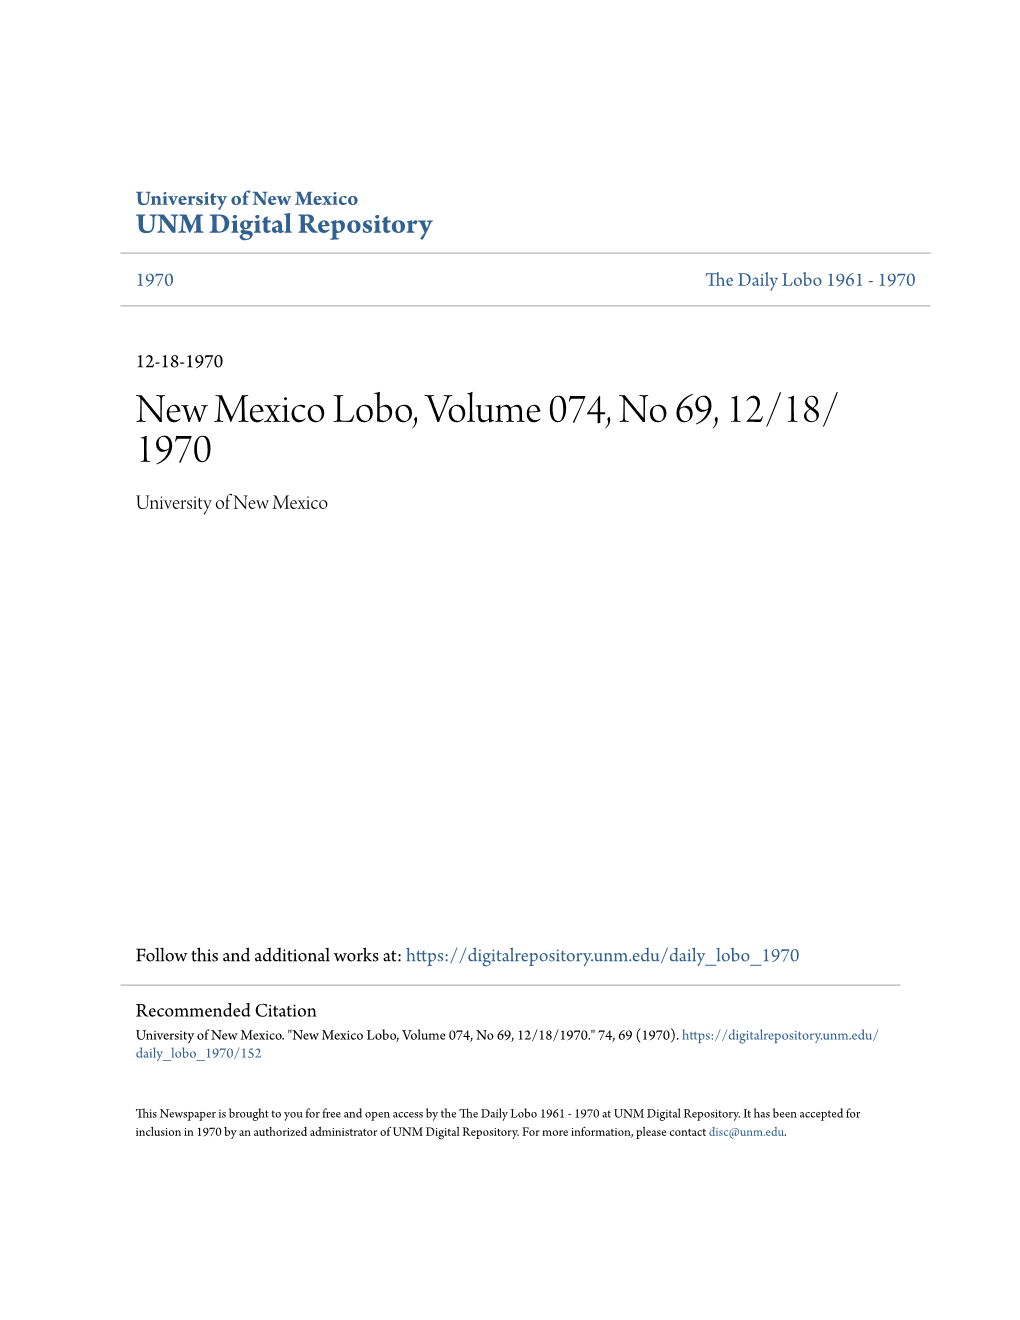 New Mexico Lobo, Volume 074, No 69, 12/18/1970." 74, 69 (1970)